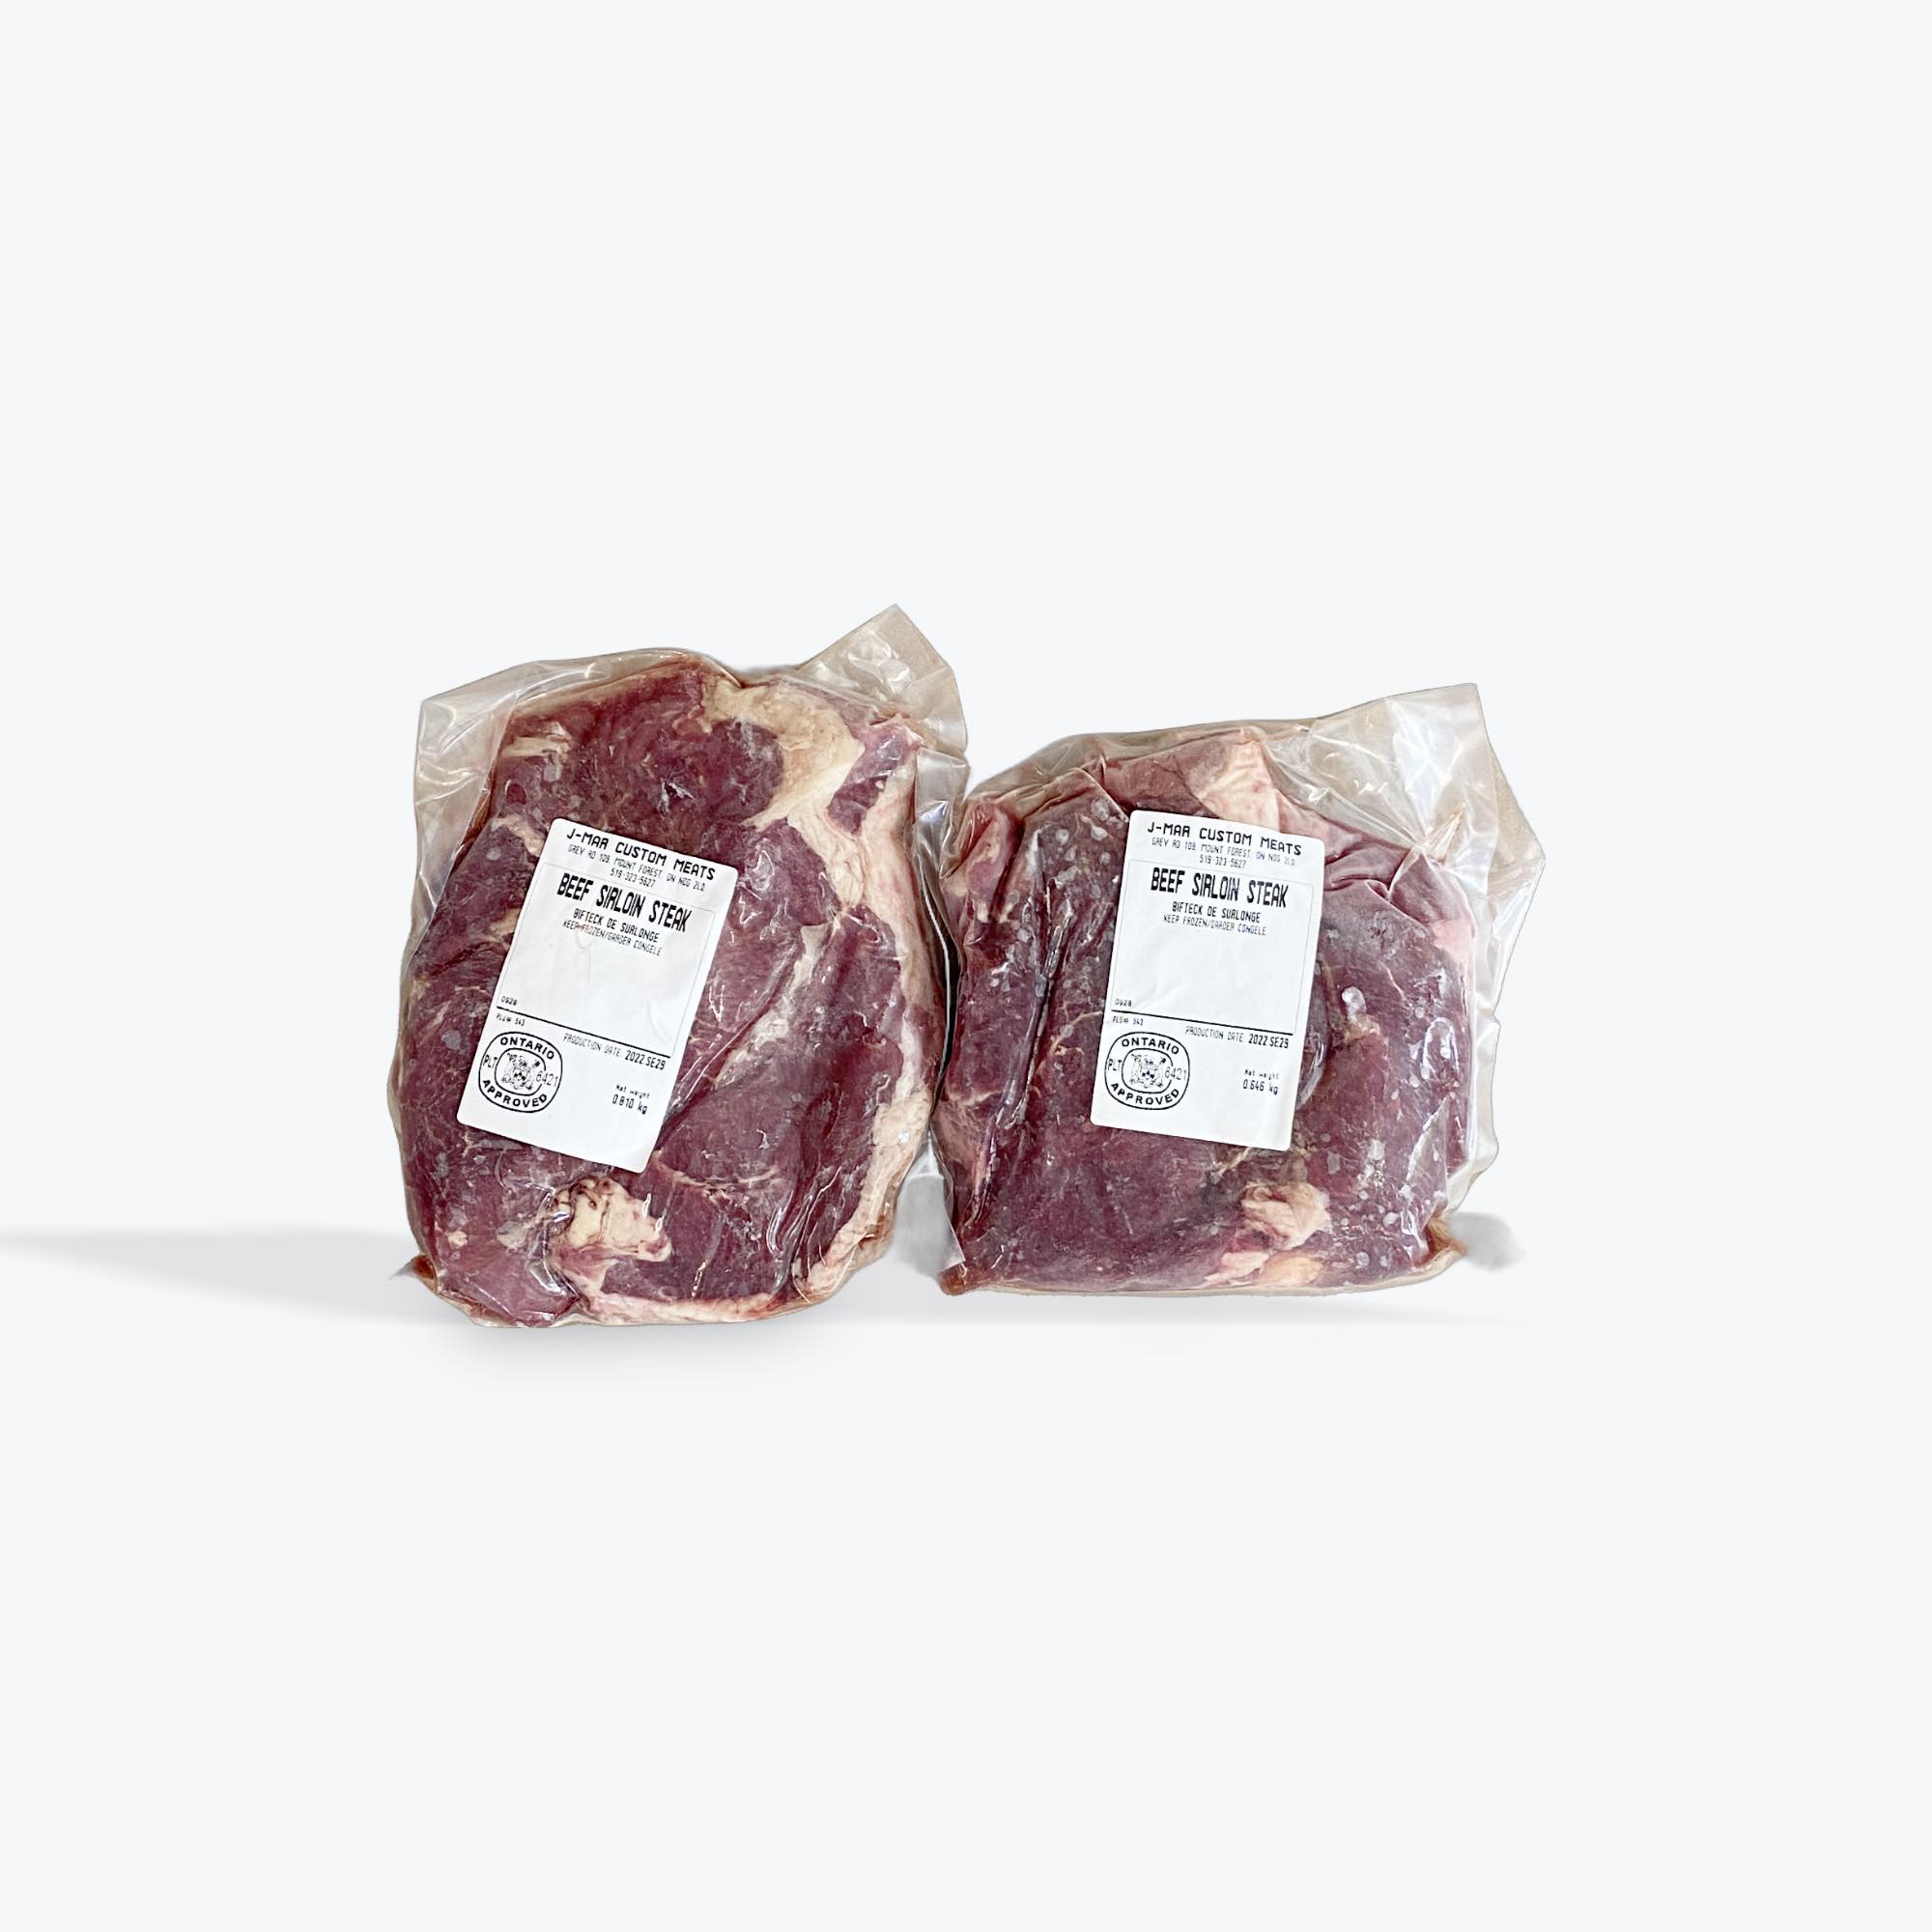 Greener Pastures Beef Sirloin Steaks 3lbs - 100% Grass Fed 2